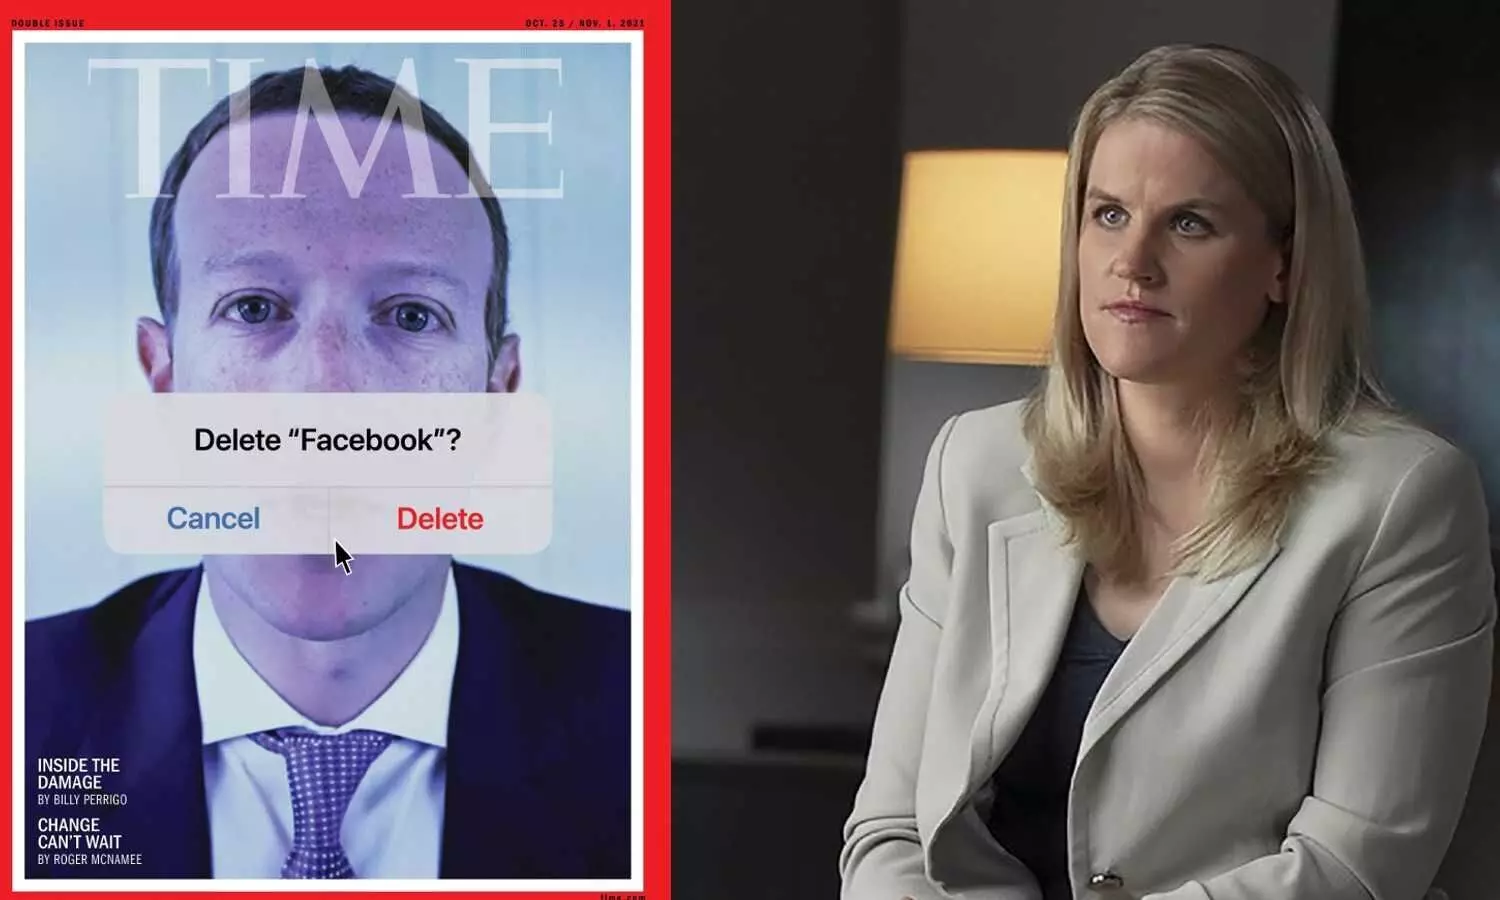 Mark Zuckerberg and former Facebook employee Frances Haugen